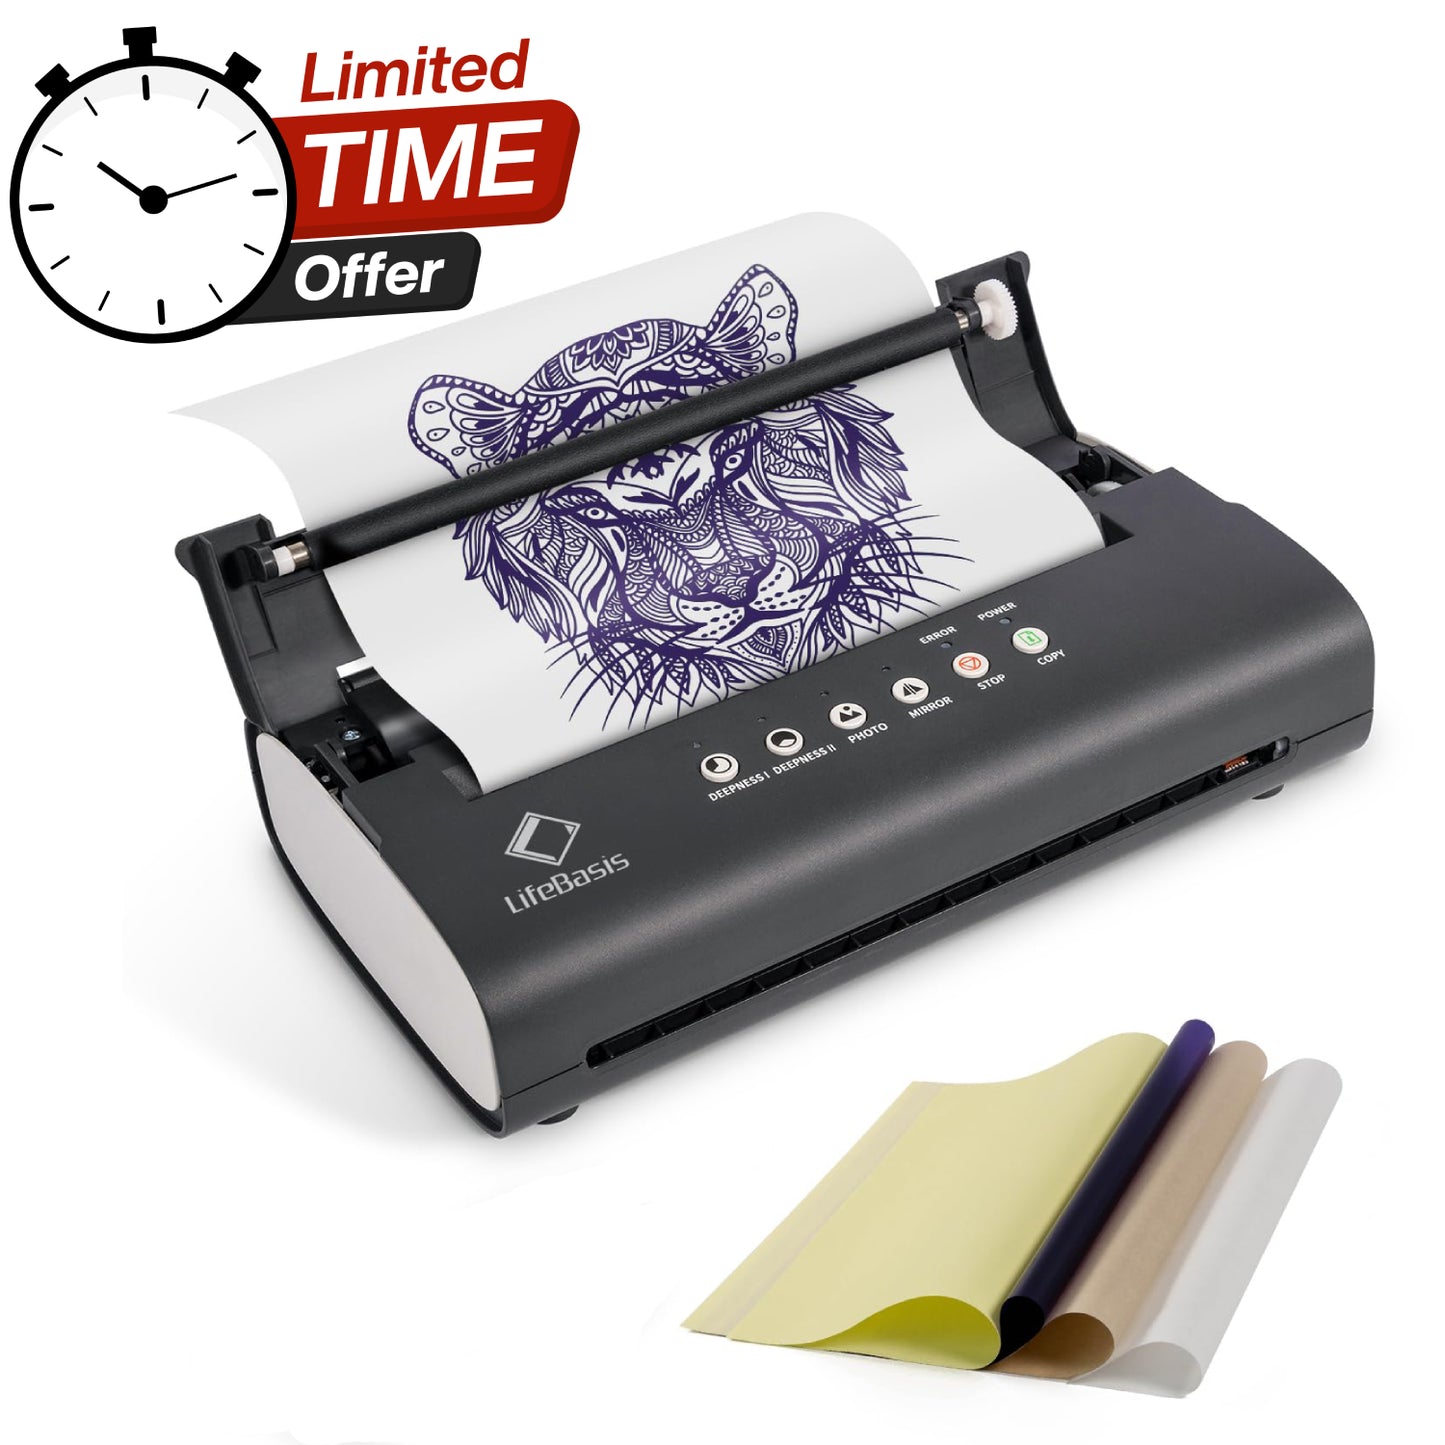 LifeBasis MT200 Tattoo Stencil Printer Thermal Tattoo Stencil Transfer Machine Tattoo Printer Upgraded Version With 20PCS Free Tattoo Transfer Paper